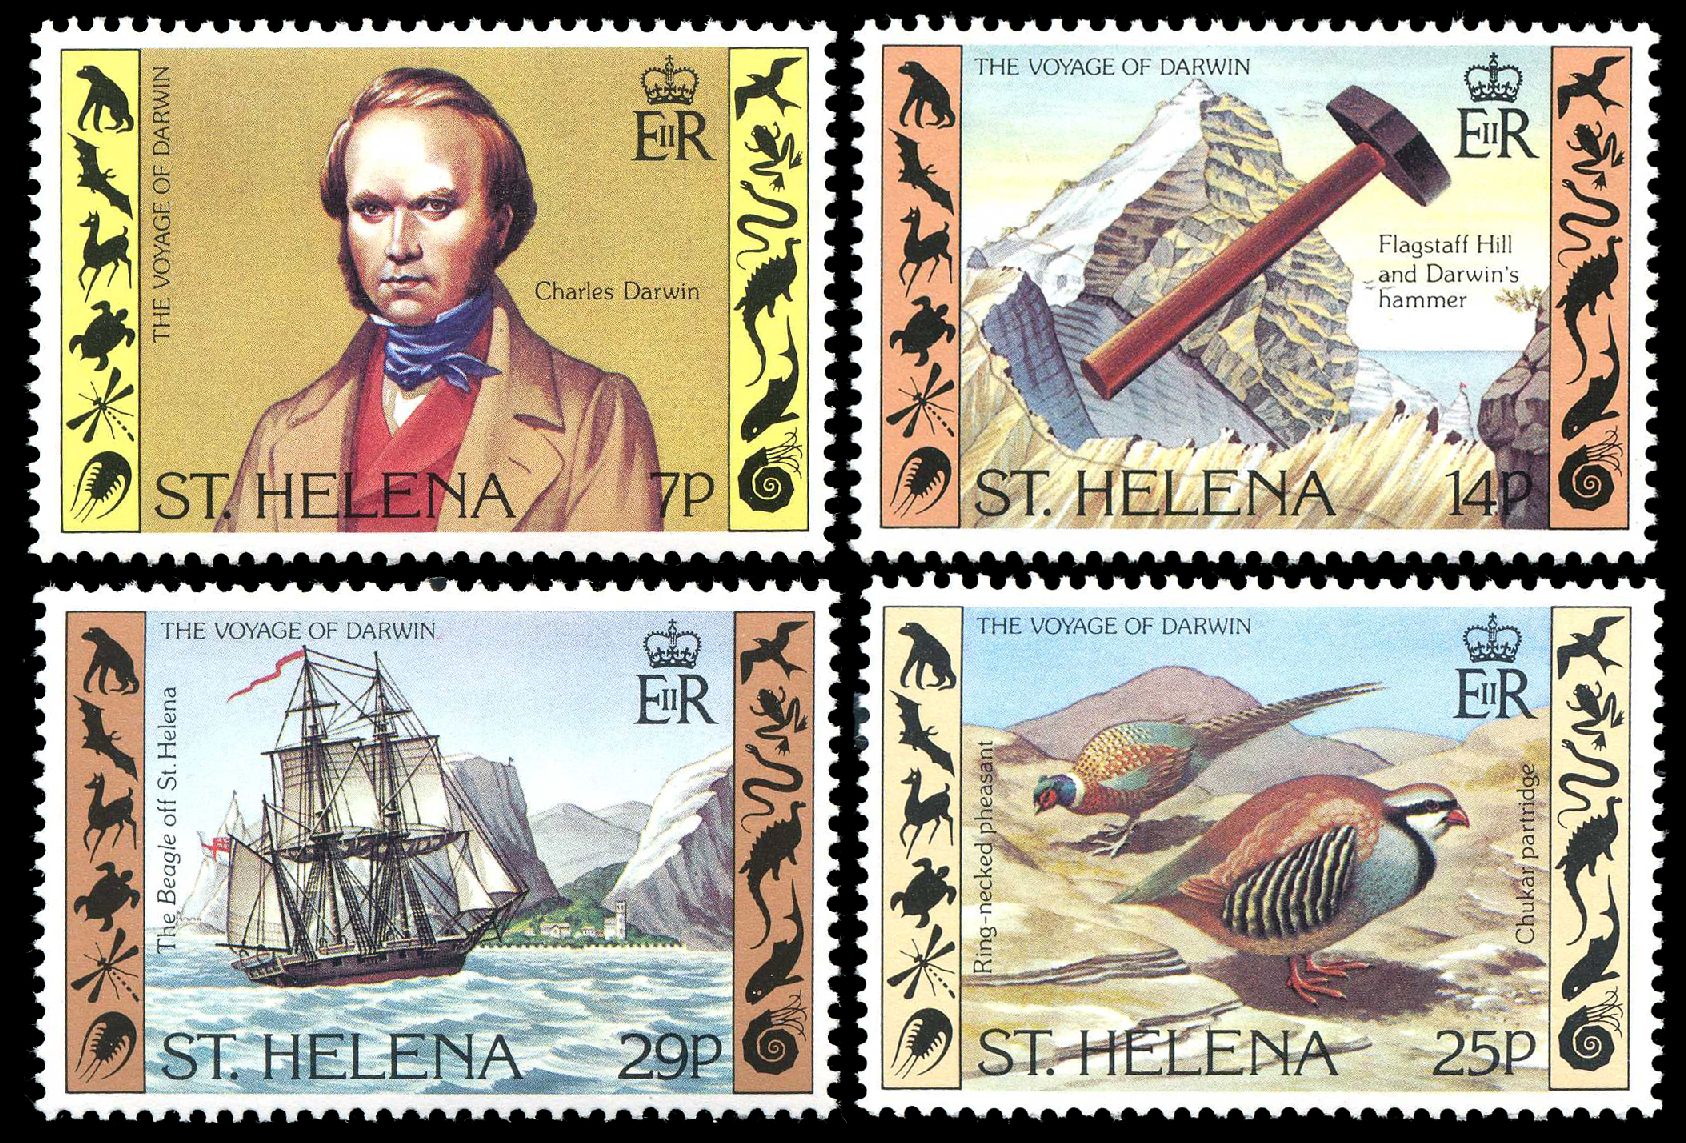 Charles Darwin on stamps of Saint Helena